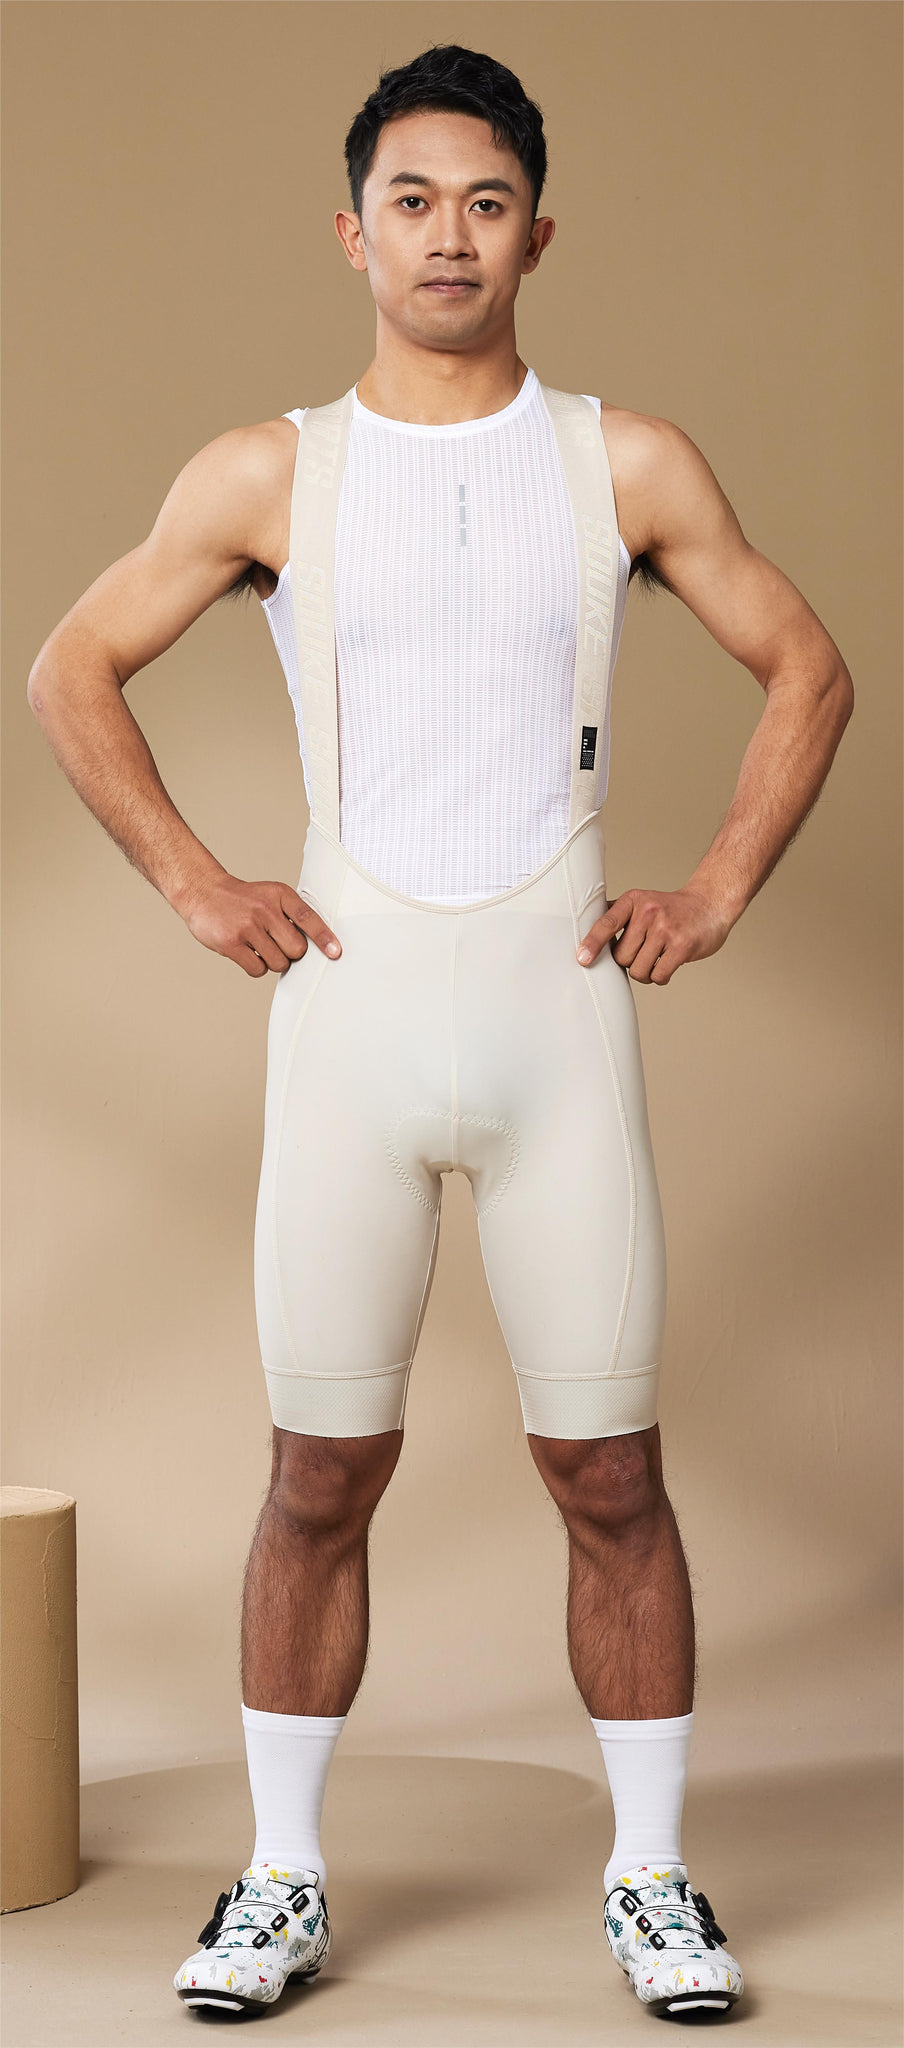 souke sports, cycling bibs, bib shorts, cyclists, men's cycling shorts, race bib shorts, BS1608